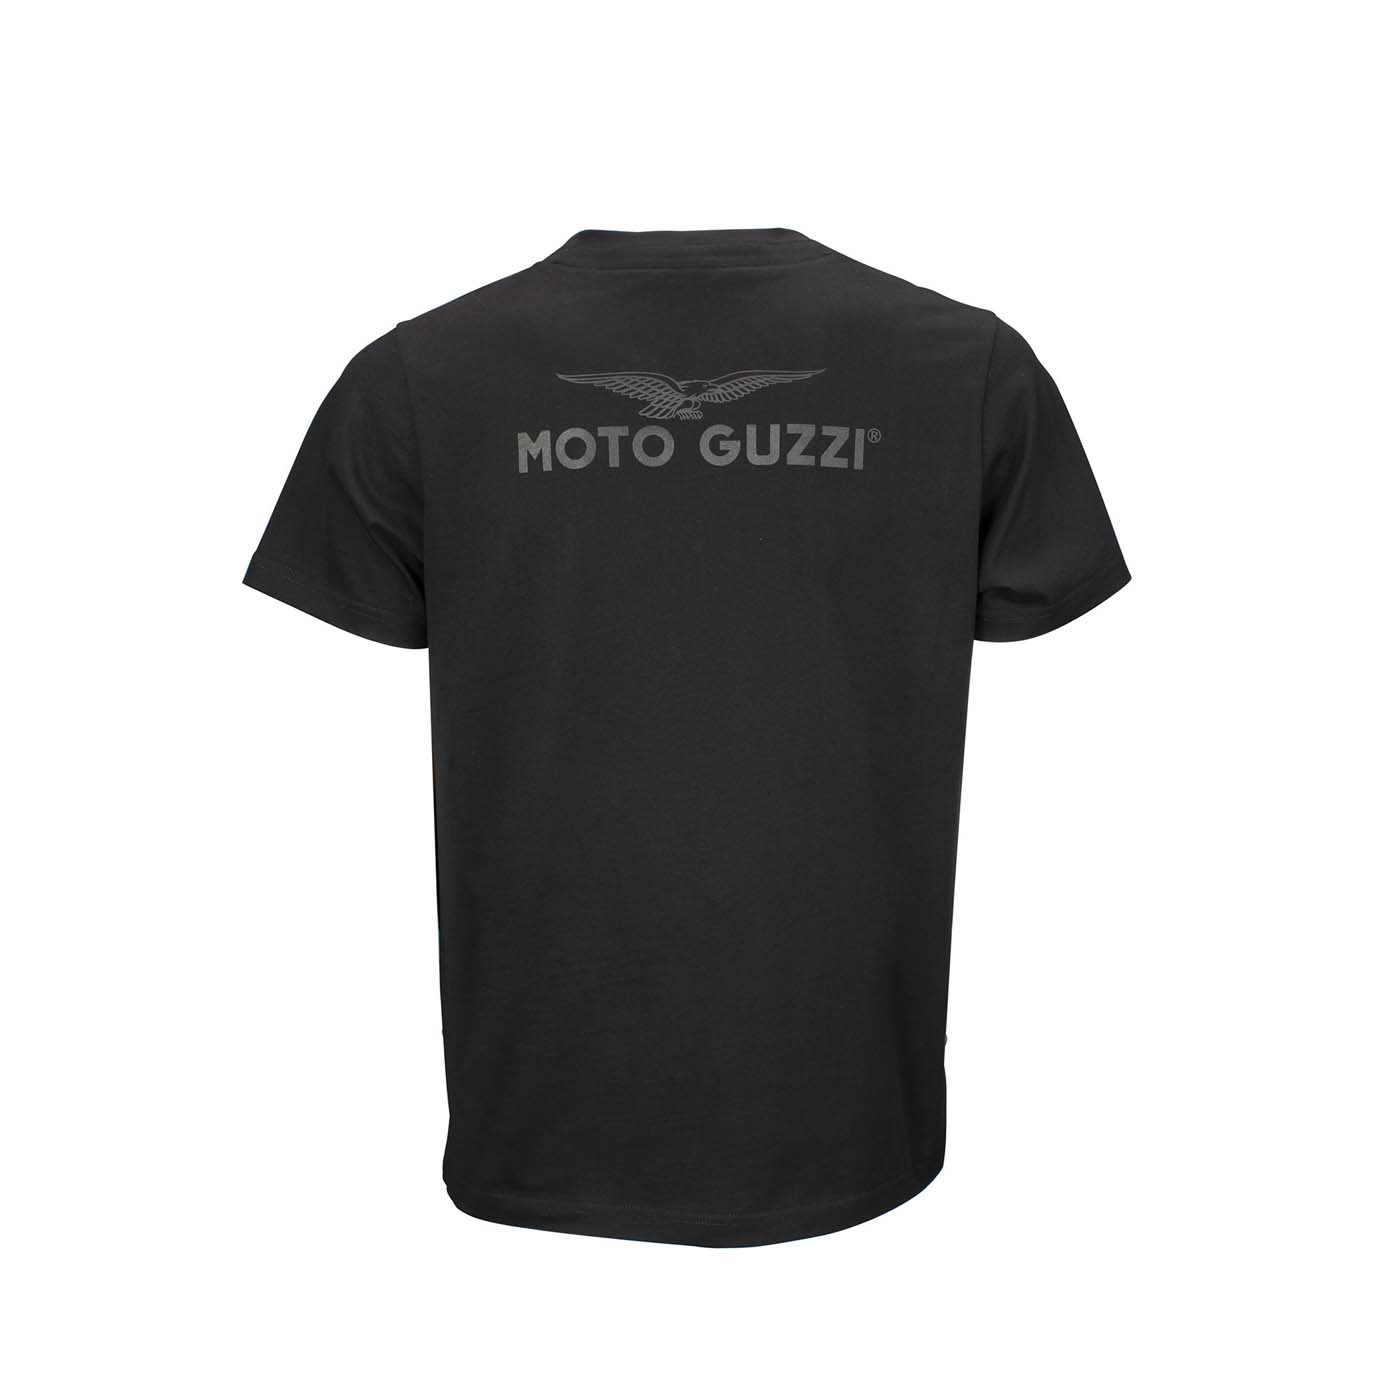 MOTO GUZZI T-SHIRT - BLACK